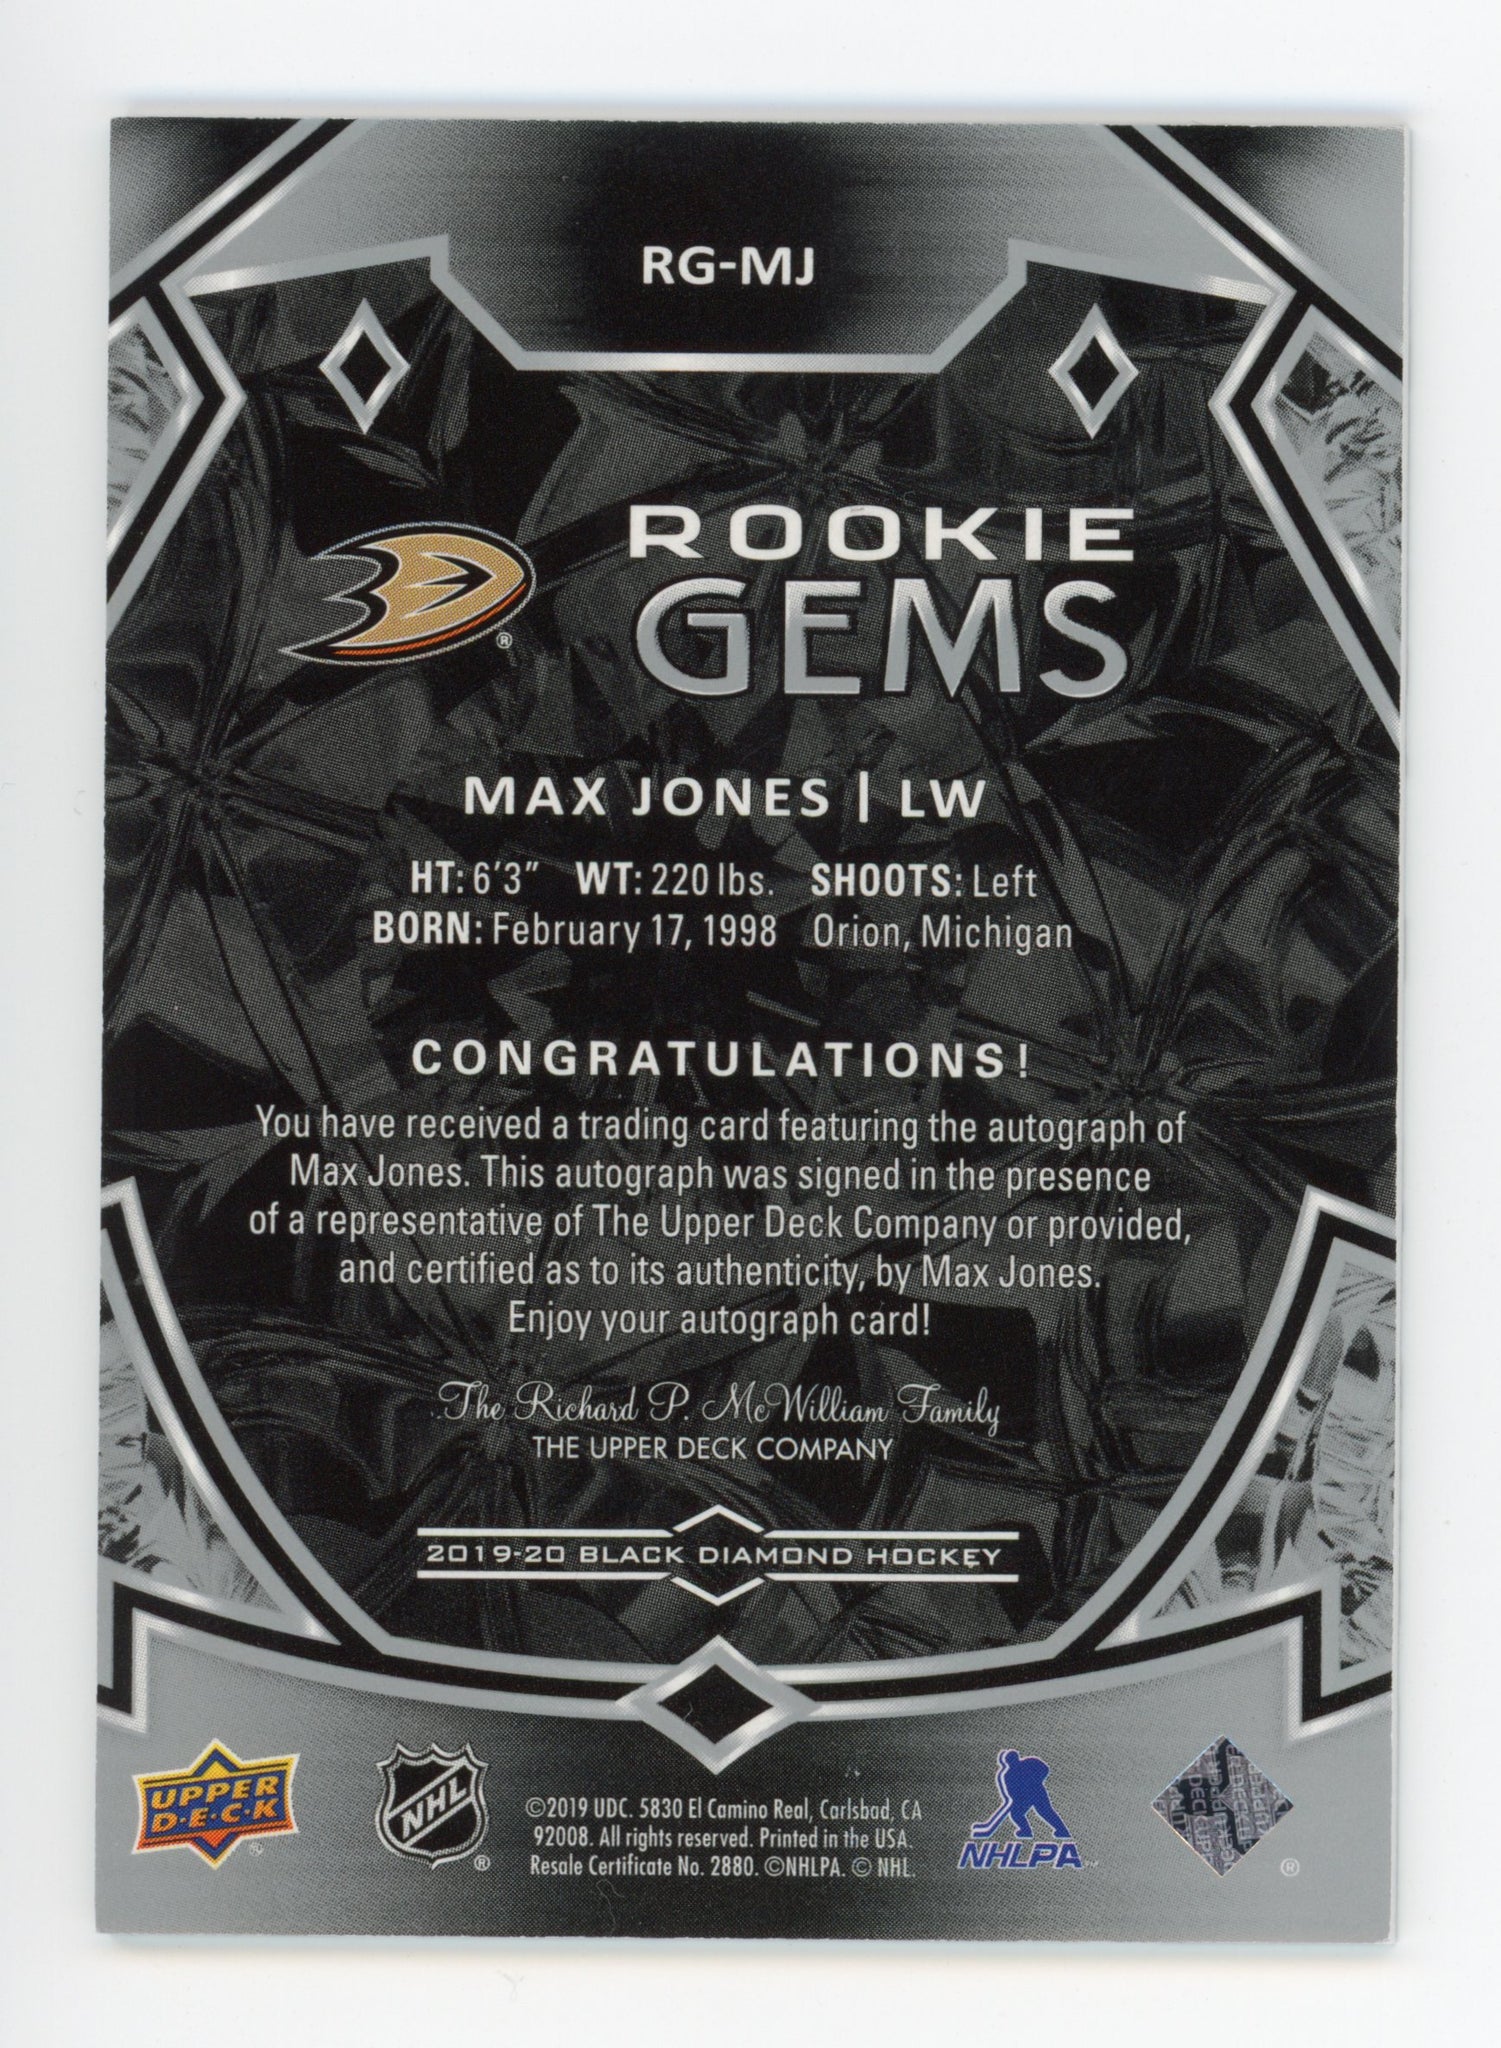 2019-2020 Max Jones Rookie Gems #d /199 Black Diamond Anaheim Ducks # RG-MJ